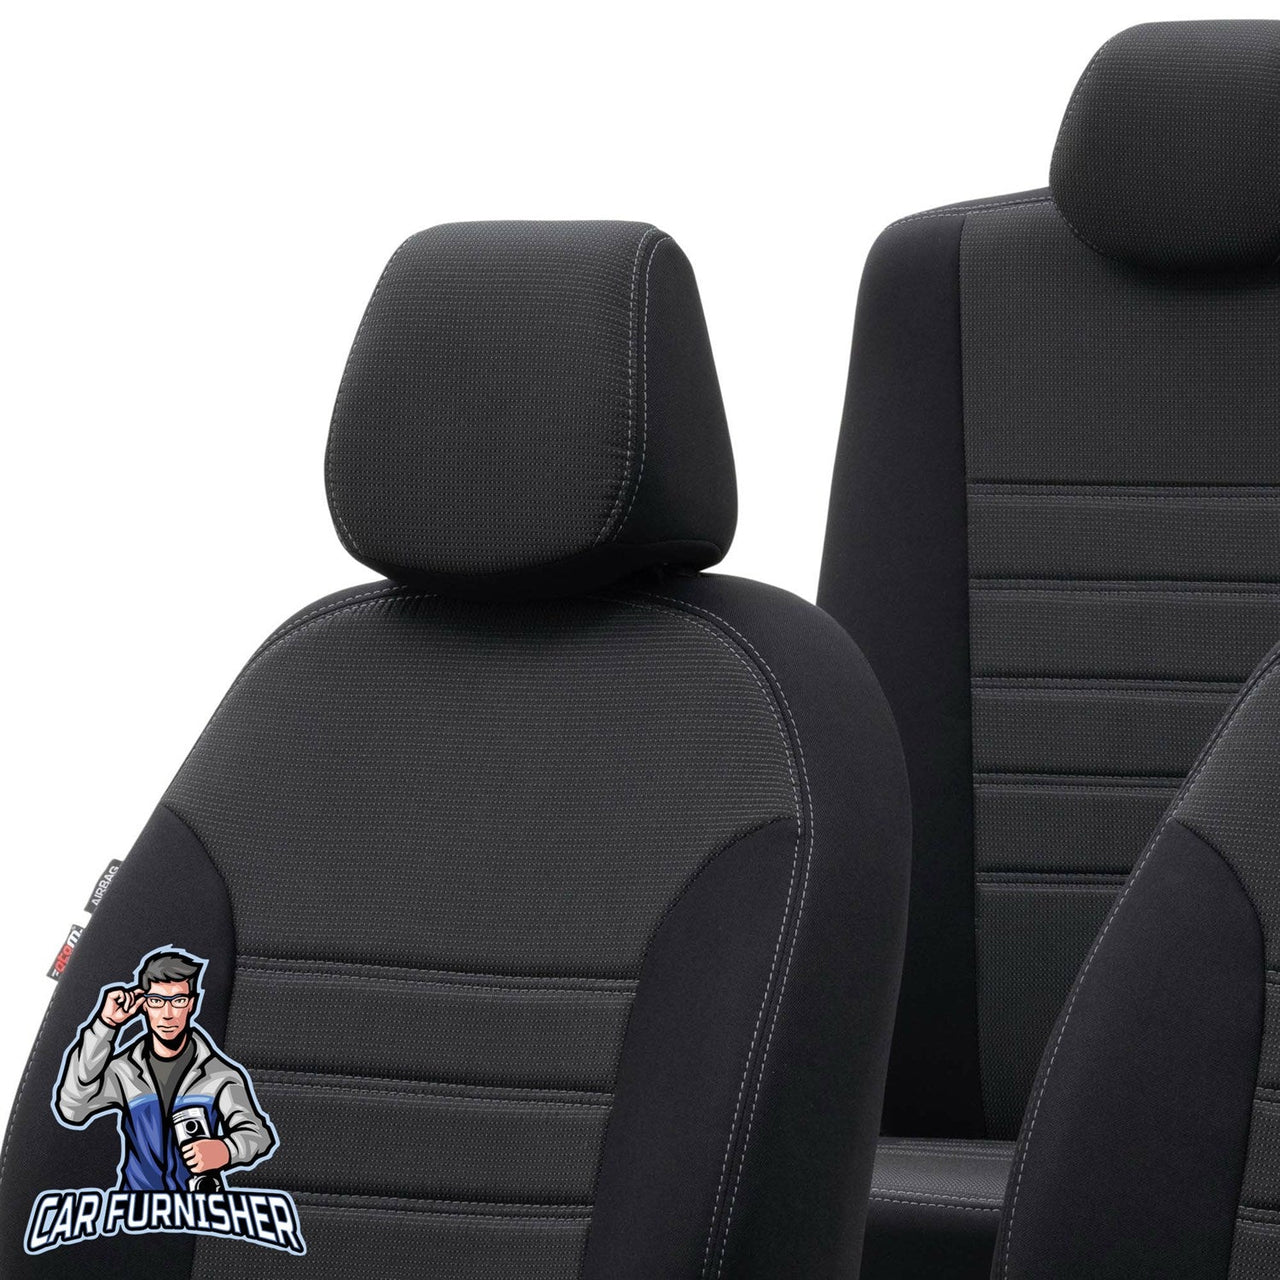 Jeep Compass Seat Covers Original Jacquard Design Dark Gray Jacquard Fabric